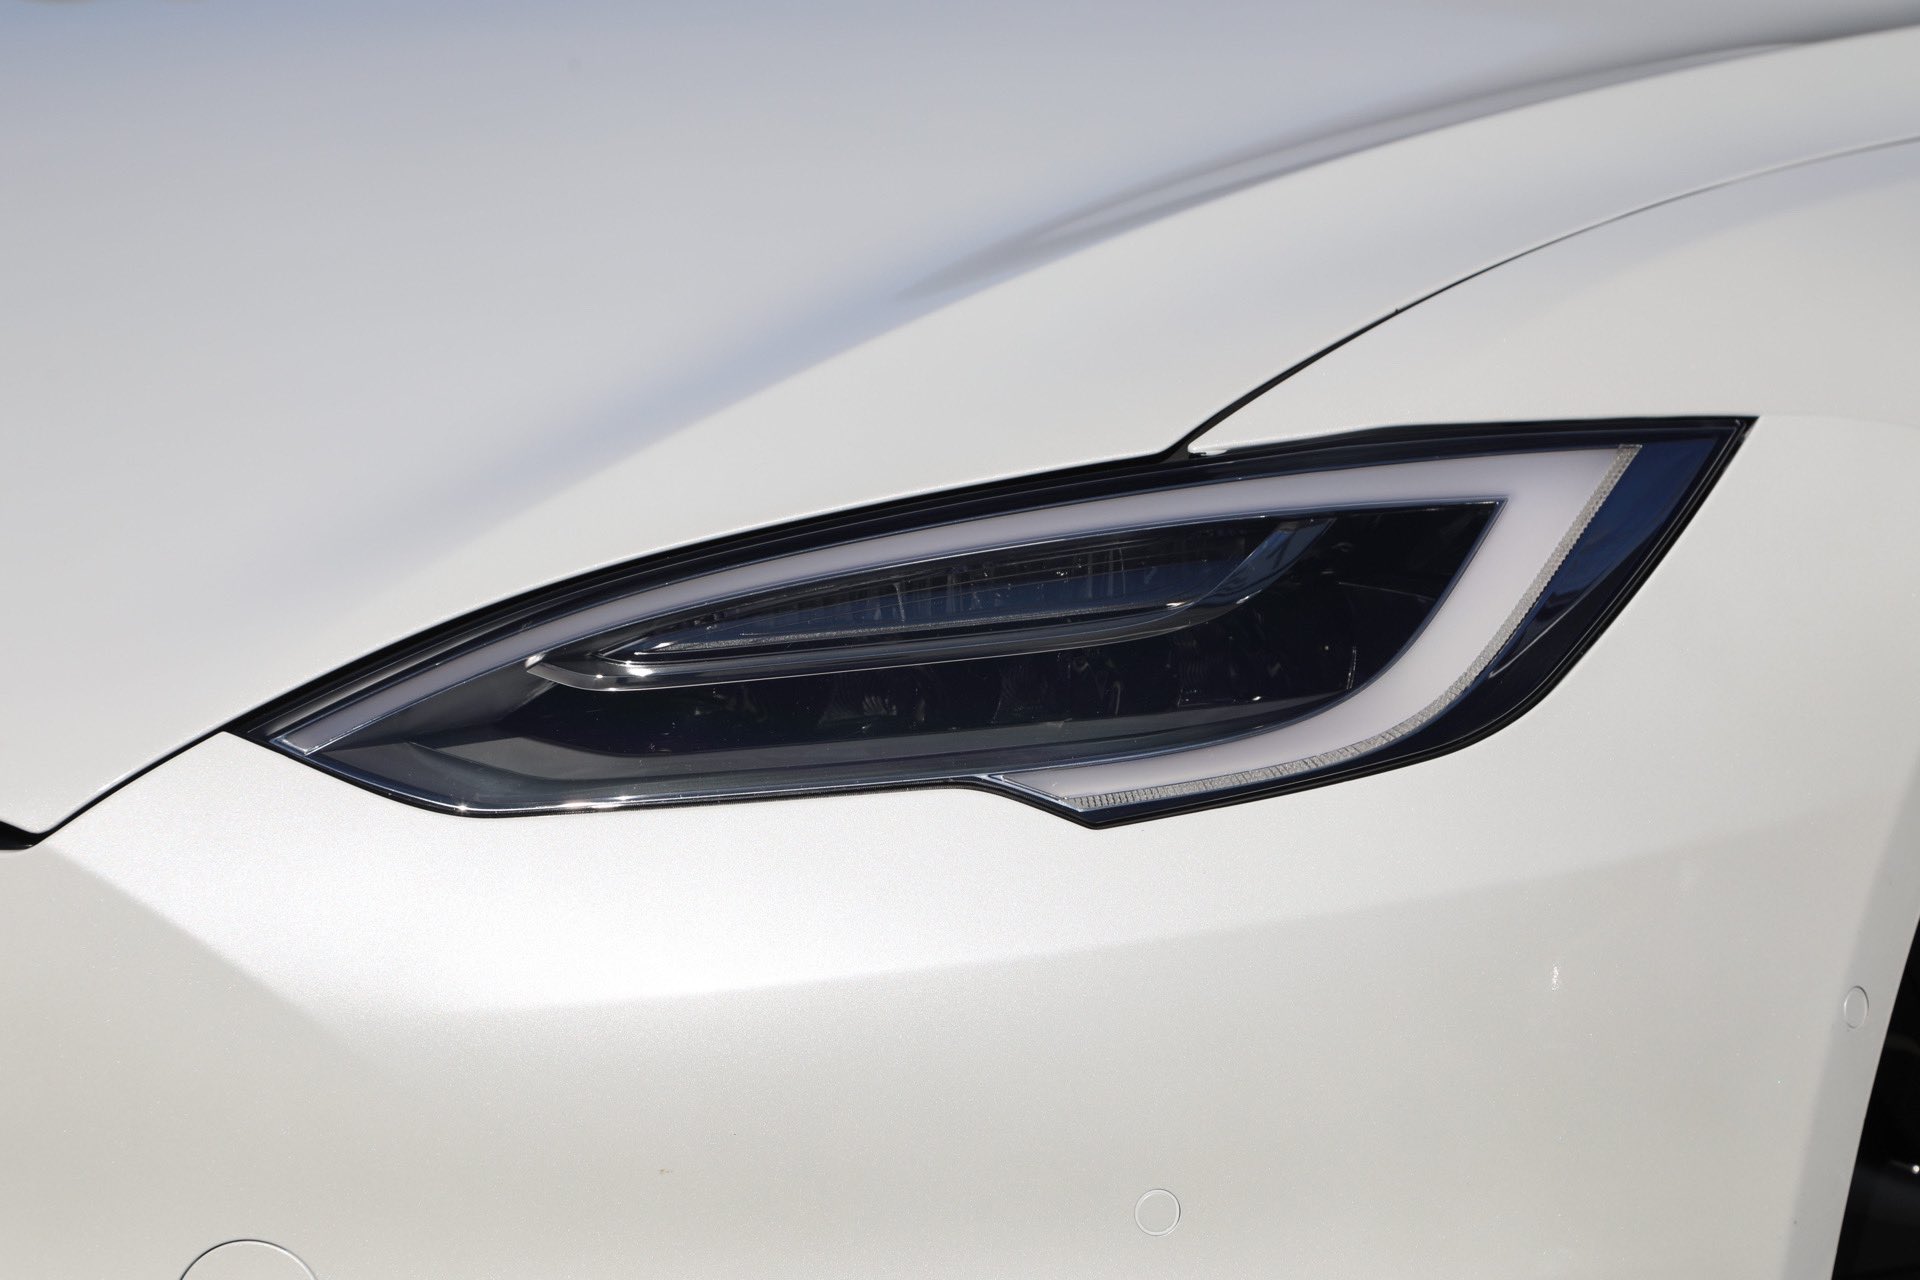 Upclose look at the new Tesla Model S Matrix LED headlights [Photos